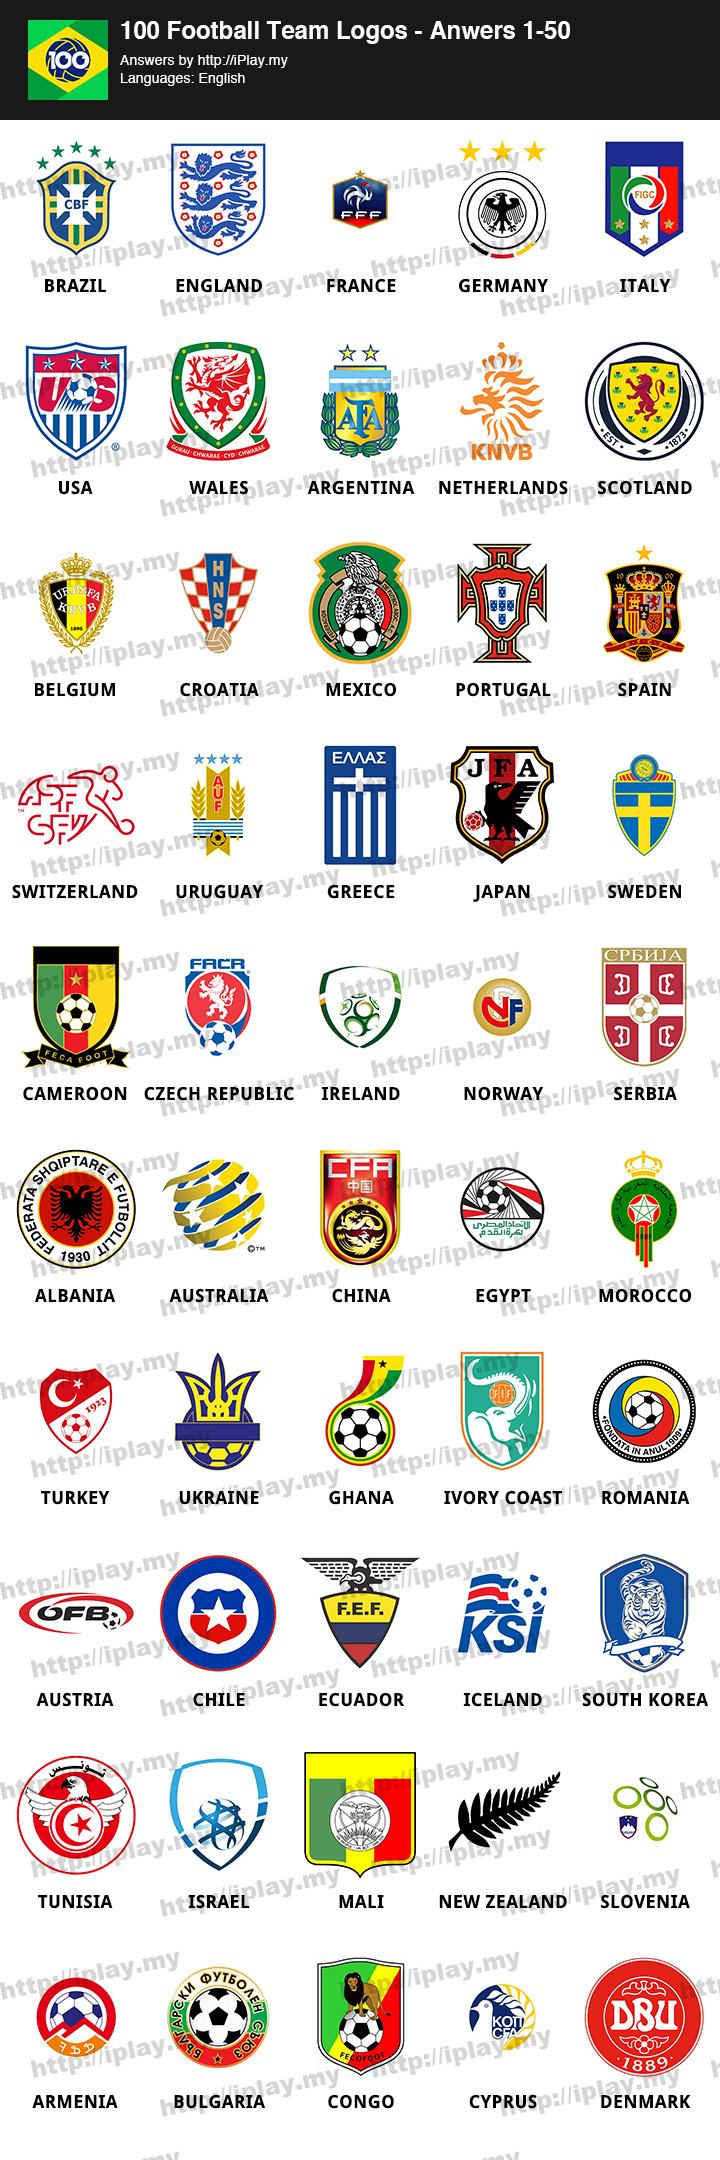 100-Football-Team-Logos-Answers-1-50